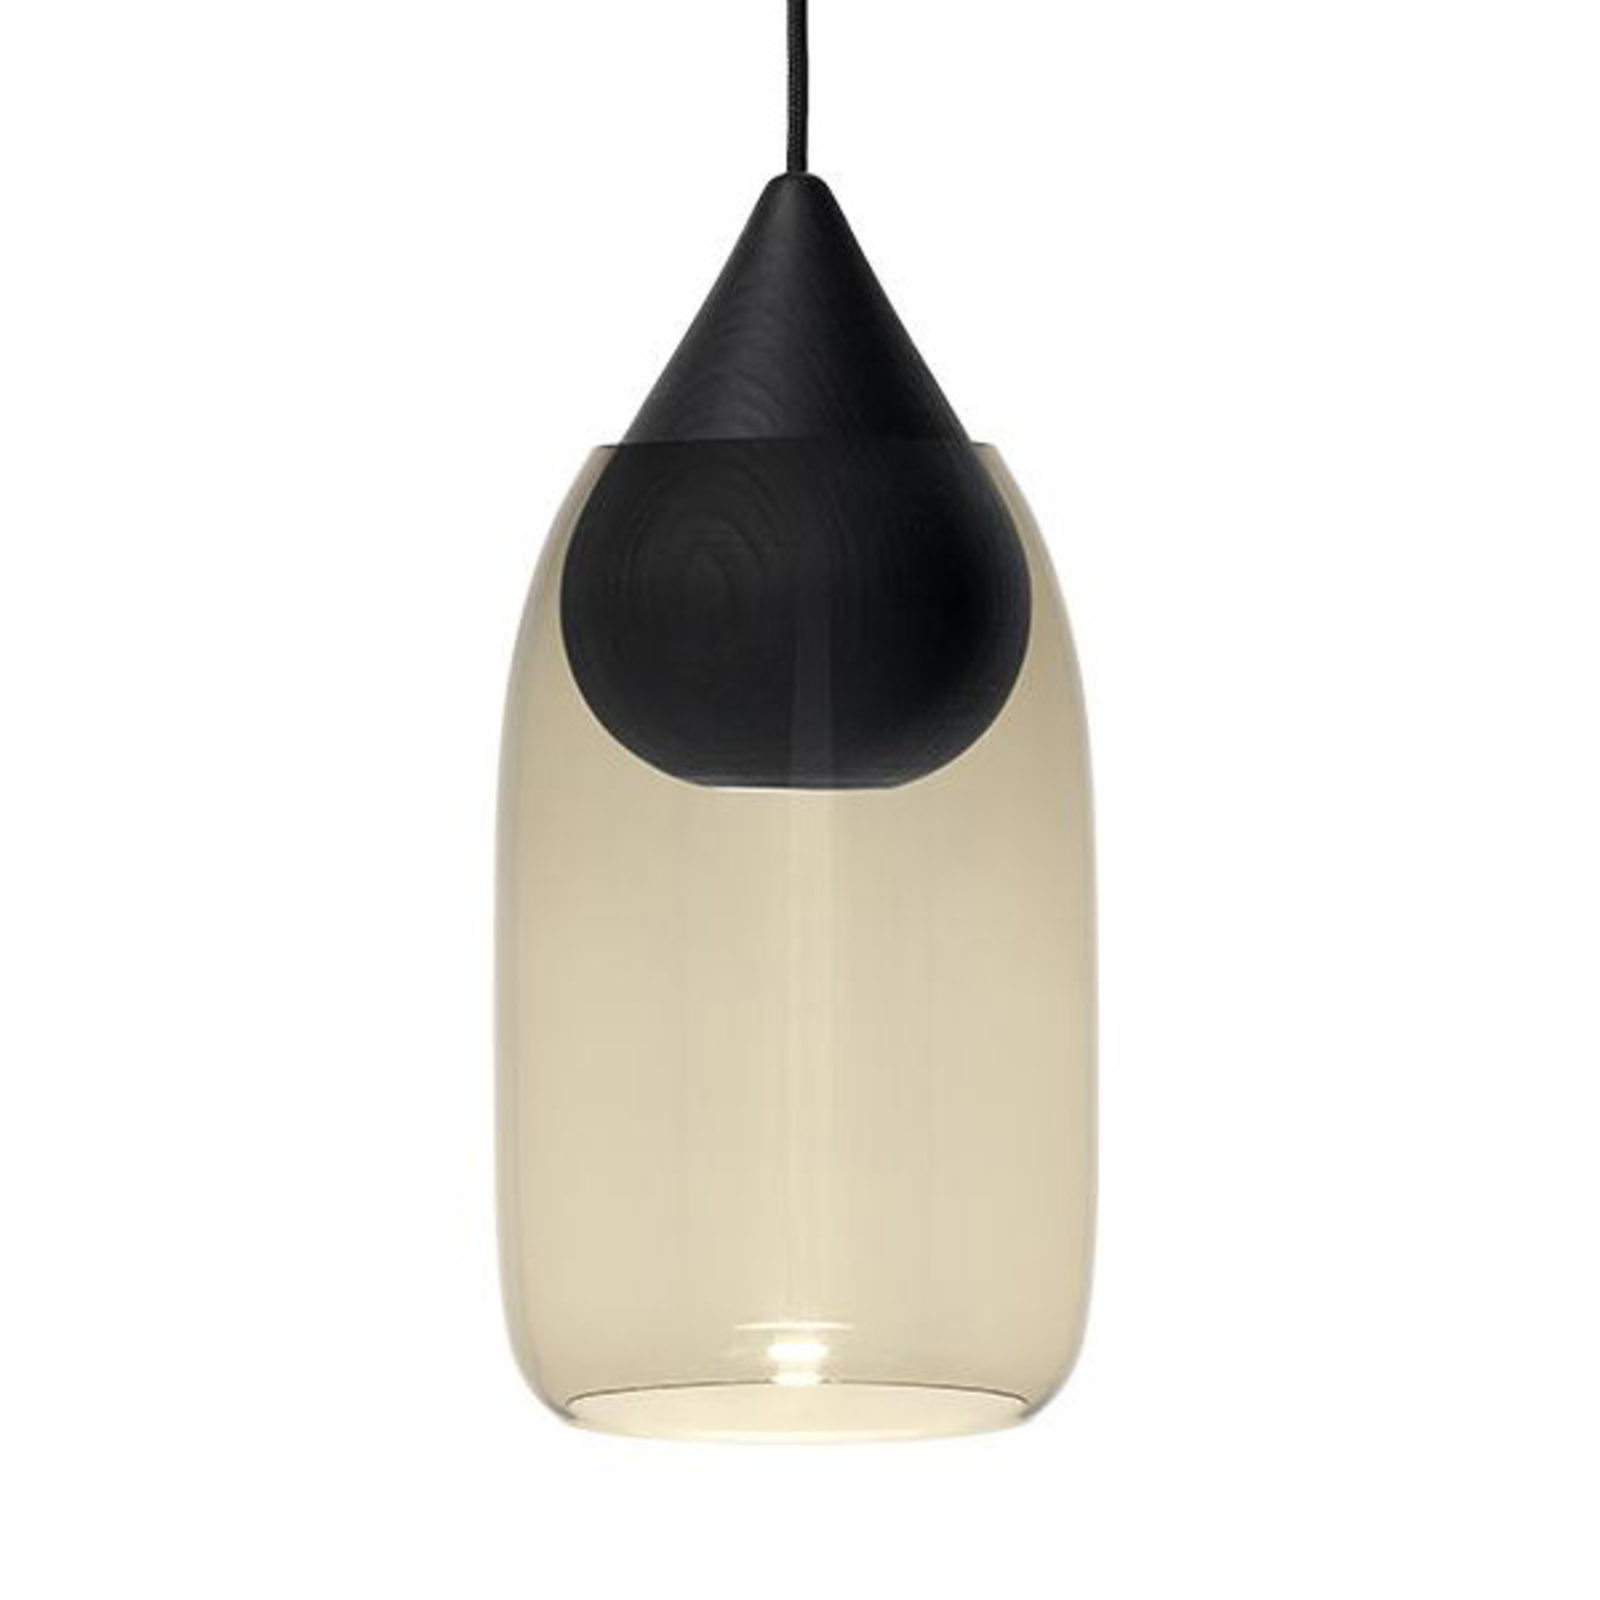 Mater Liuku Drop hanglamp hout zwart glas